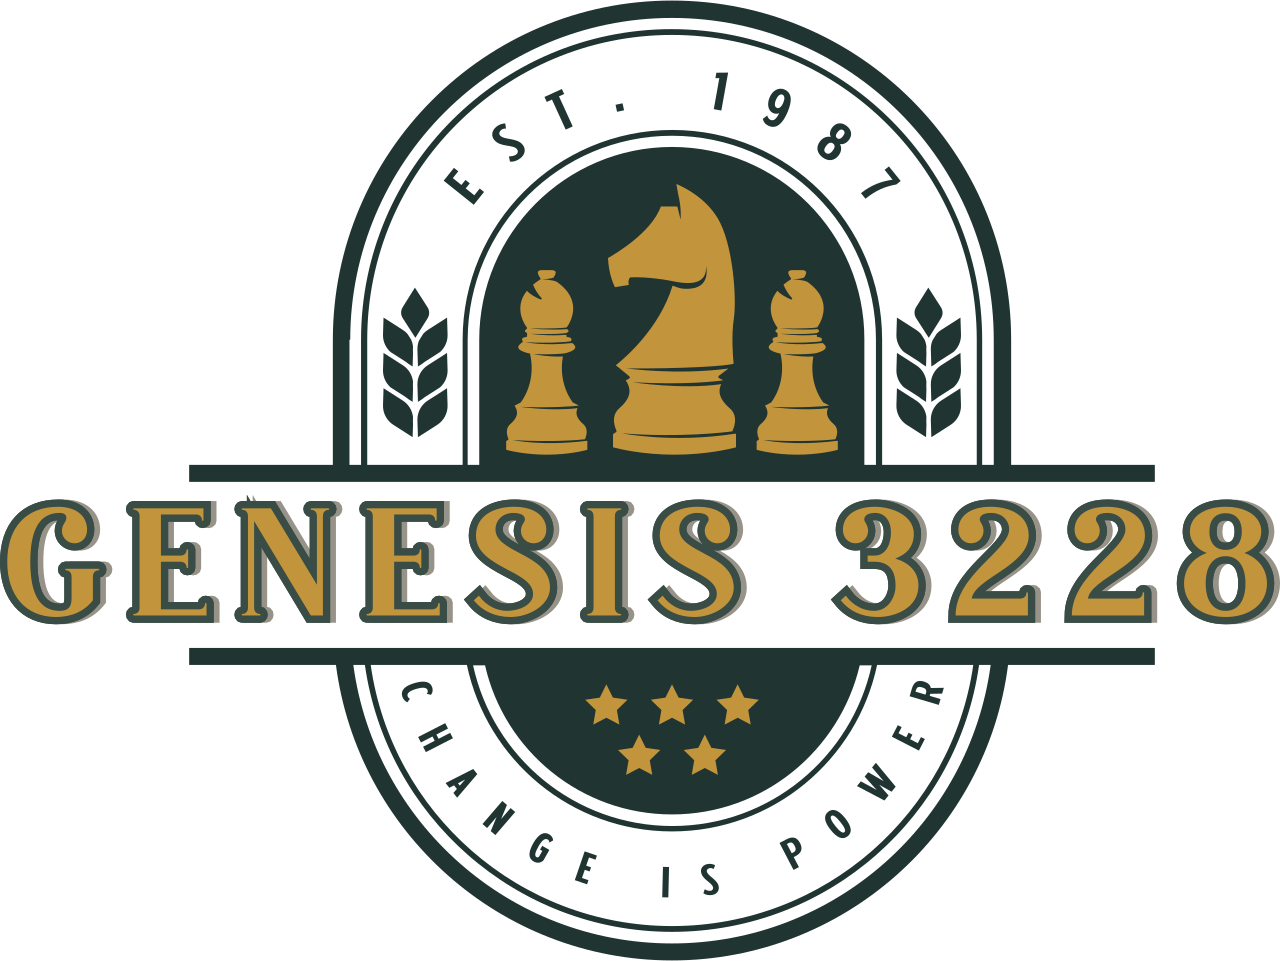 Genesis 3228 's logo